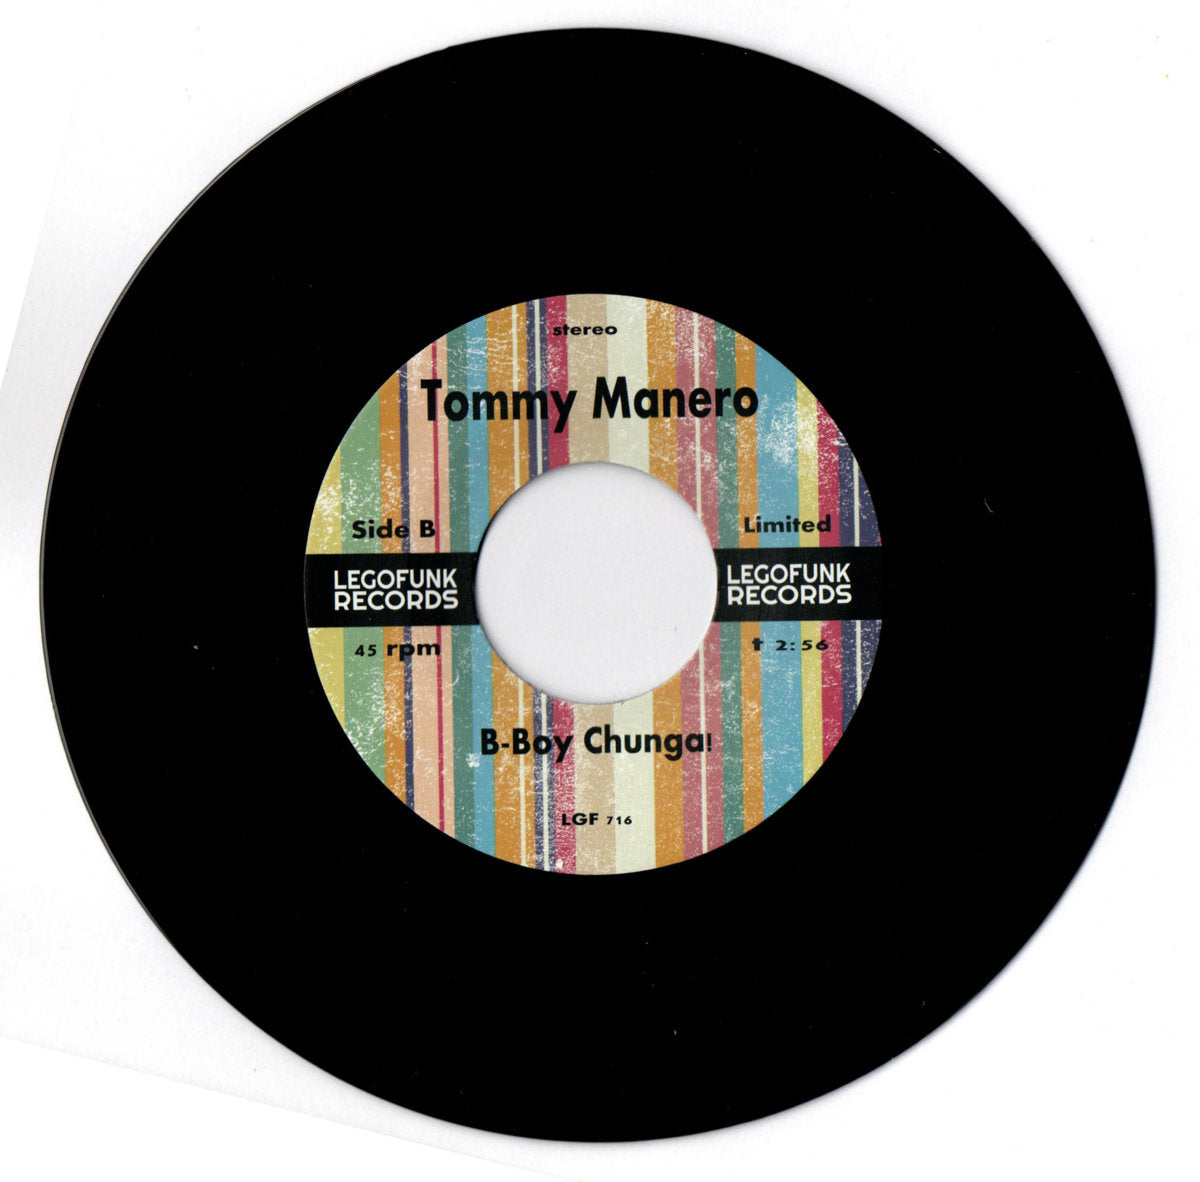 Voodoocuts - Ray's Delight b/w Tommy Manero - B-Boy Chunga